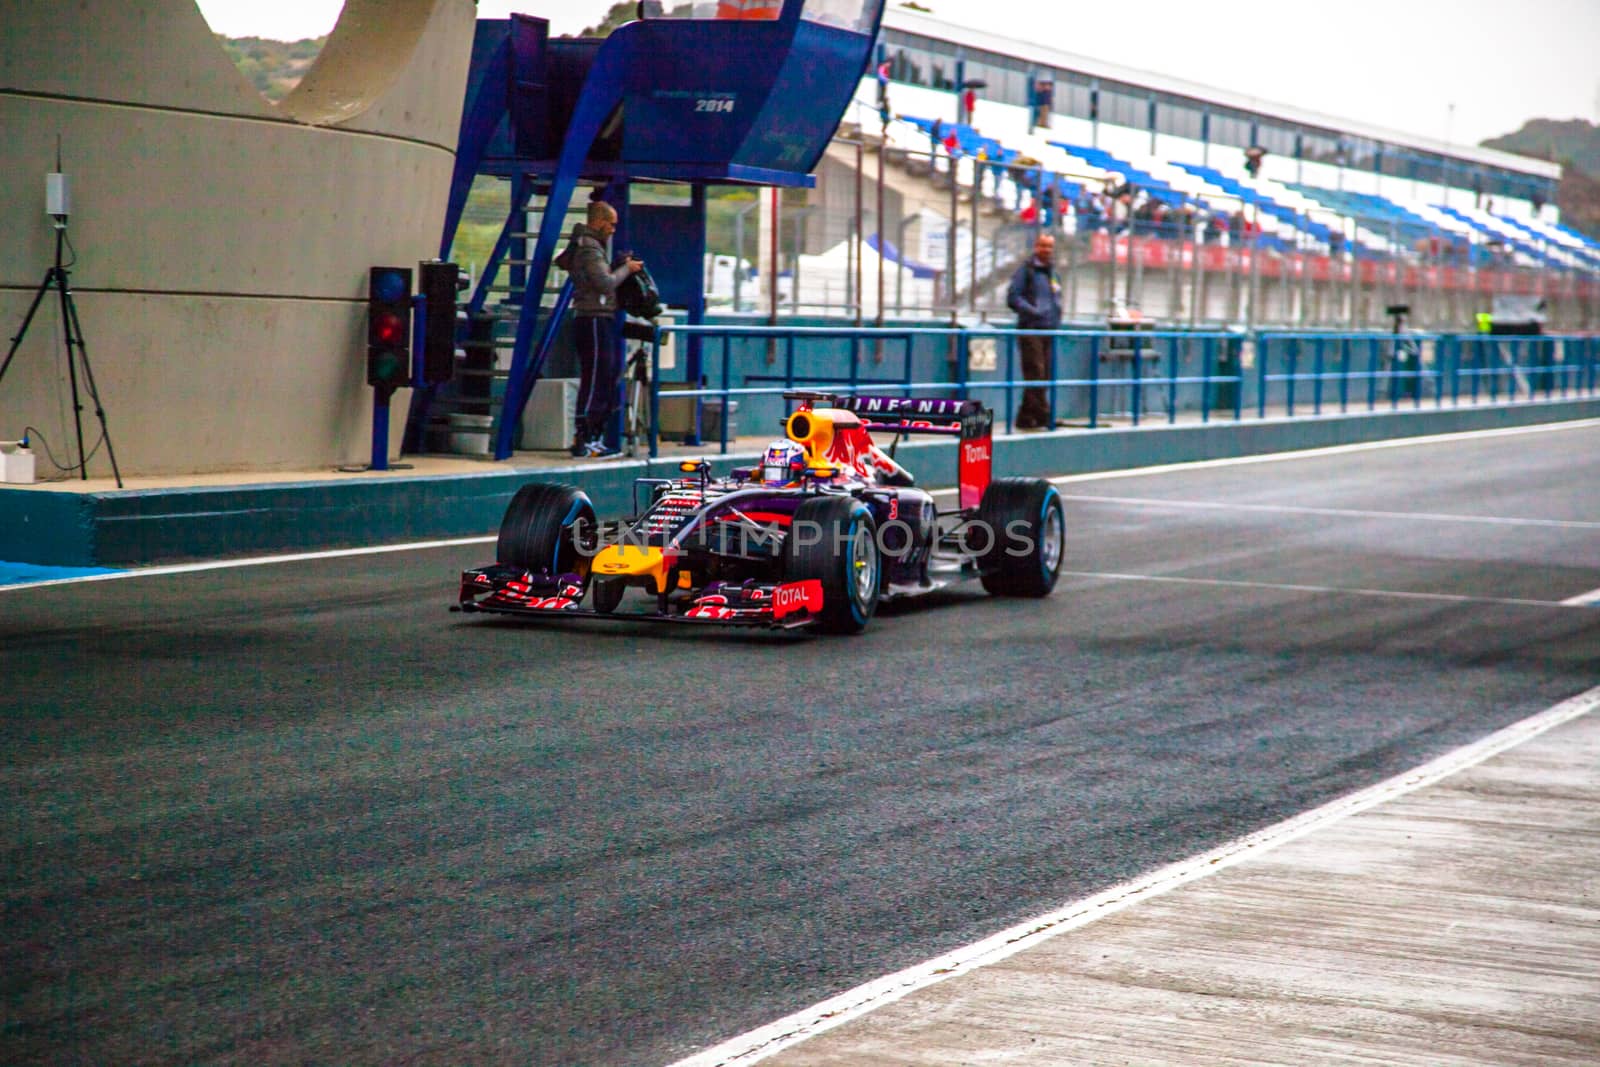 JEREZ DE LA FRONTERA, SPAIN - JAN 31: Daniel Ricciardo of Infinity Red Bull Racing F1 leaving the pit on training session on January 31 , 2014, in Jerez de la Frontera , Spain